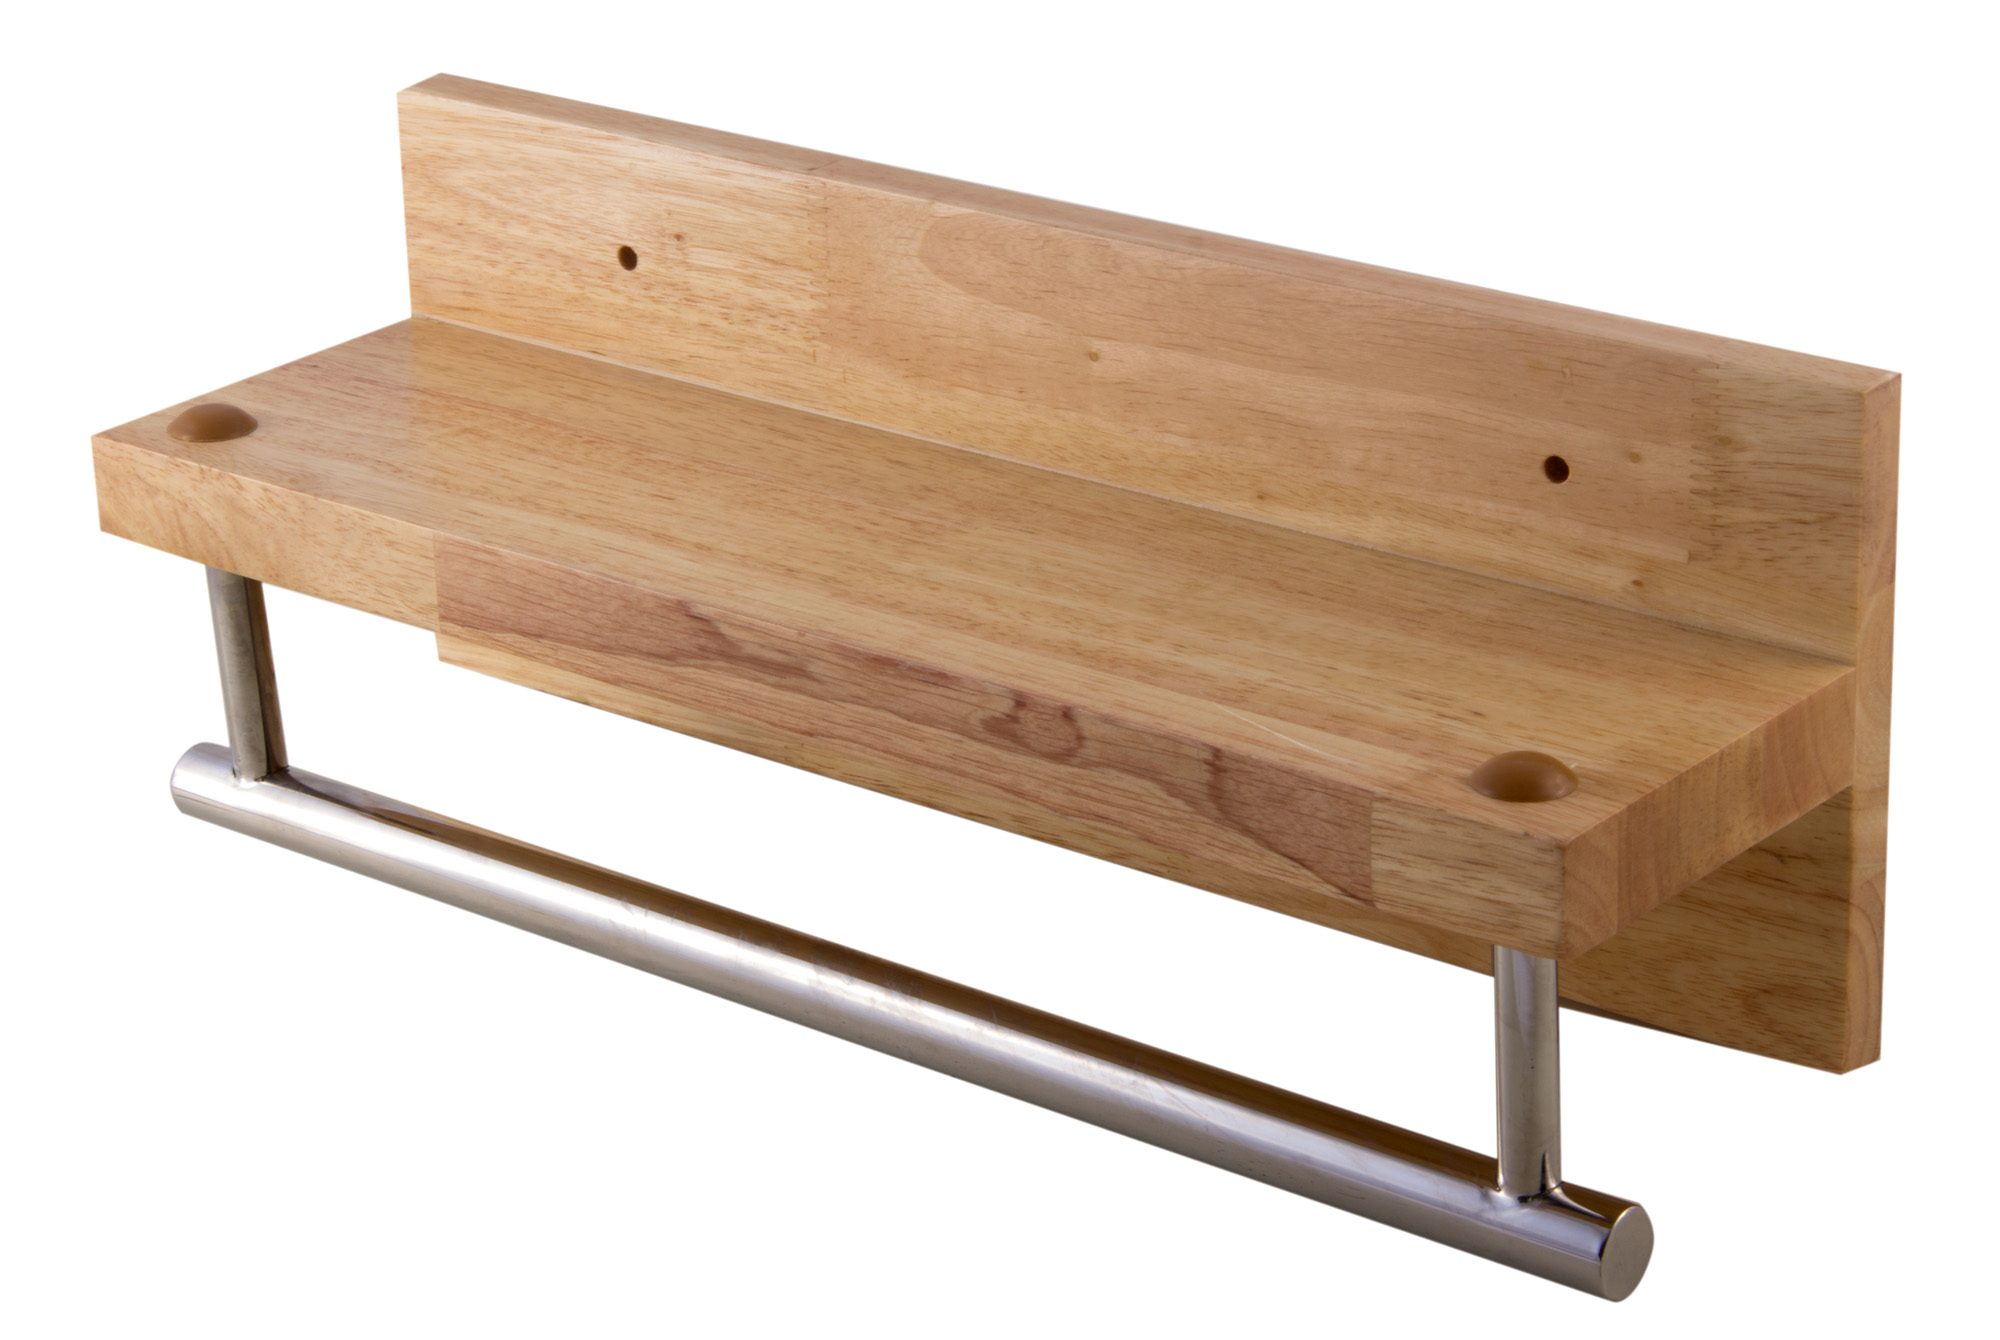 ALFI brand AB5511 16" Wooden Shelf with Chrome Towel Bar Bathroom Accessory